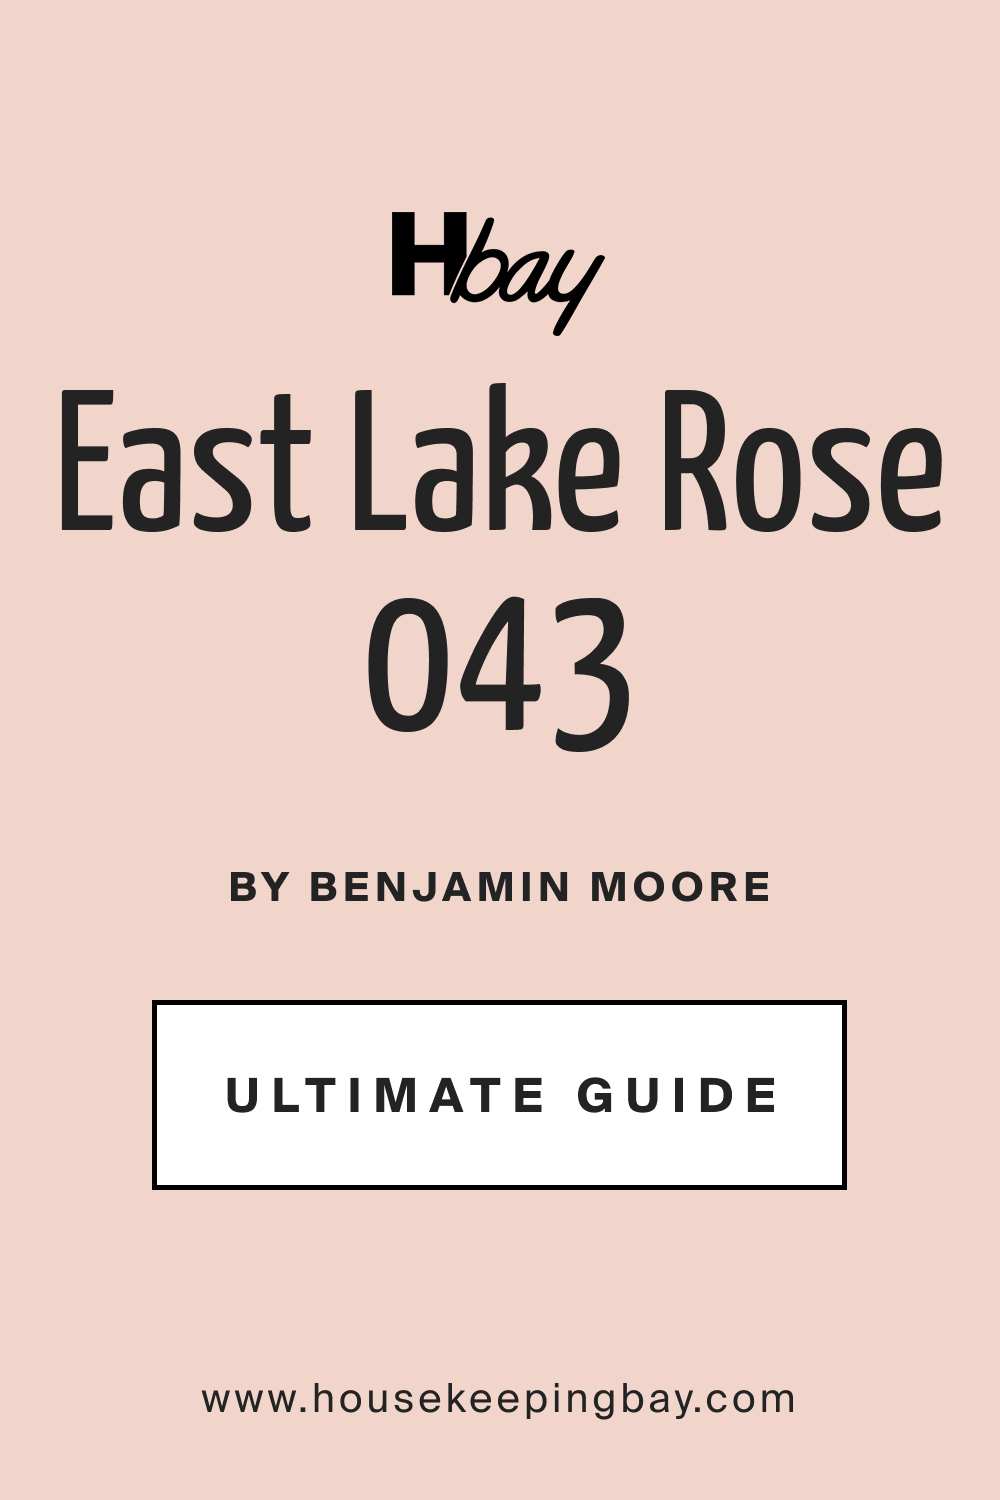 BM East Lake Rose 043 Paint Color by Benjamin Moore Ultimate Guide